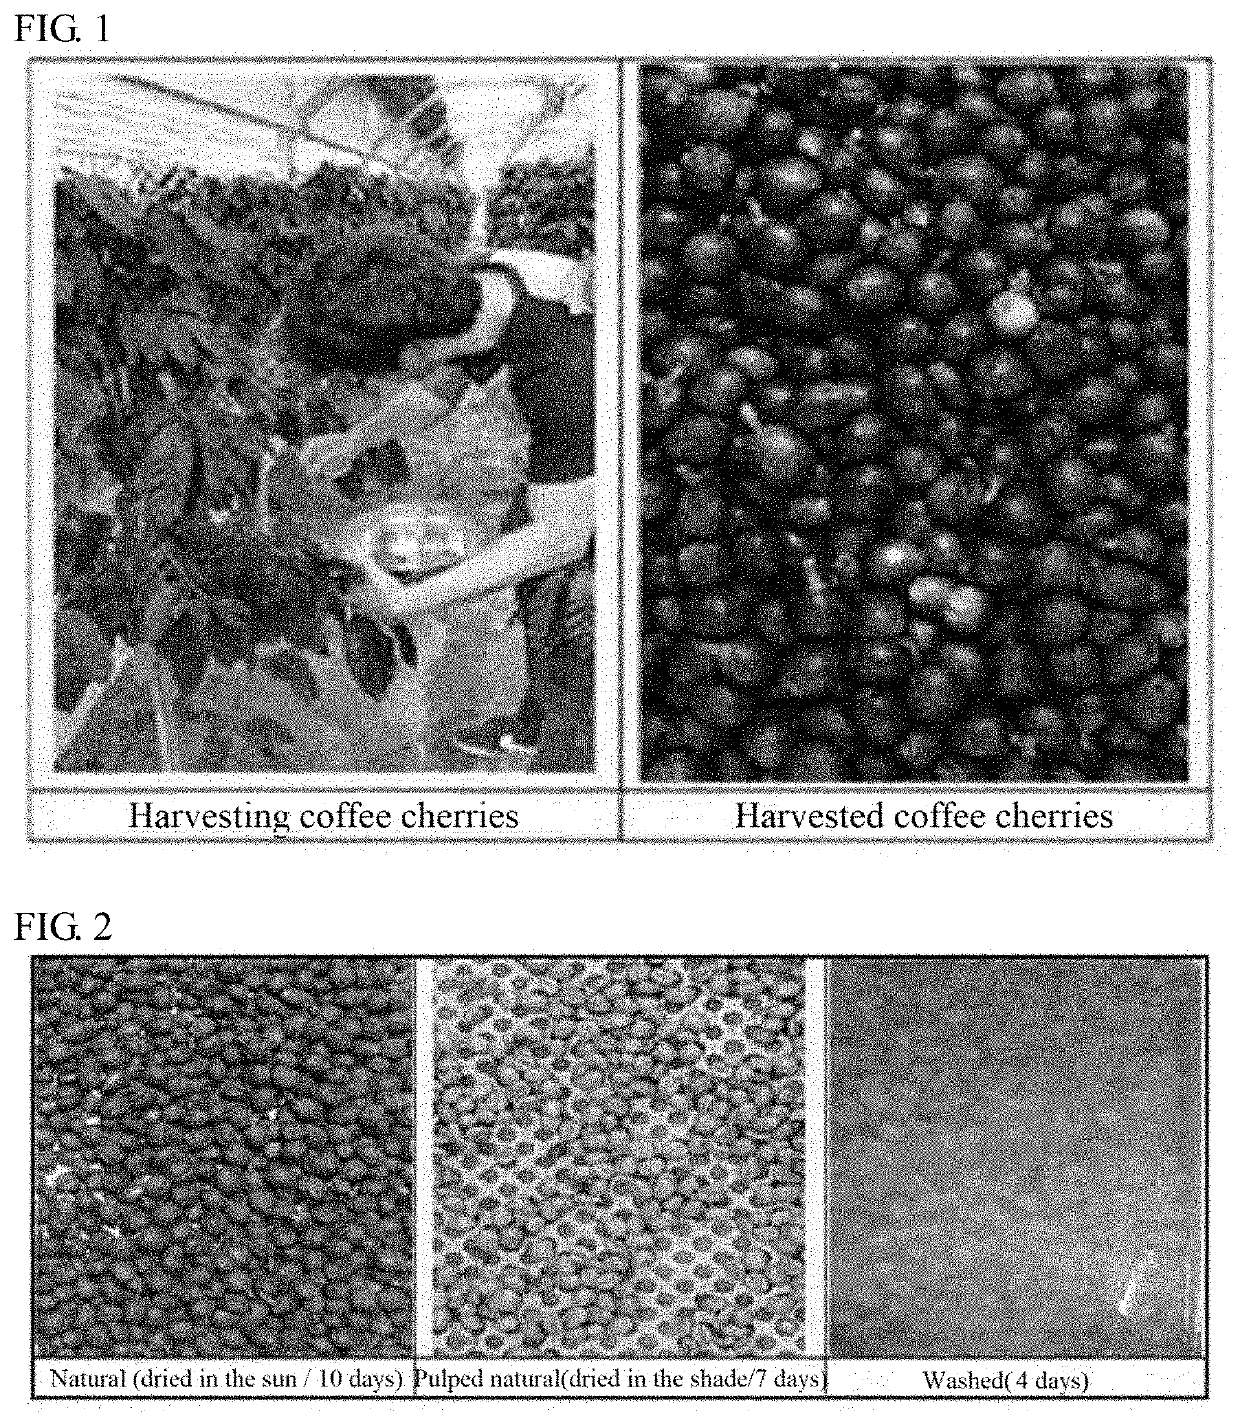 Method for processing coffee cherries using deep sea water and microorganisms